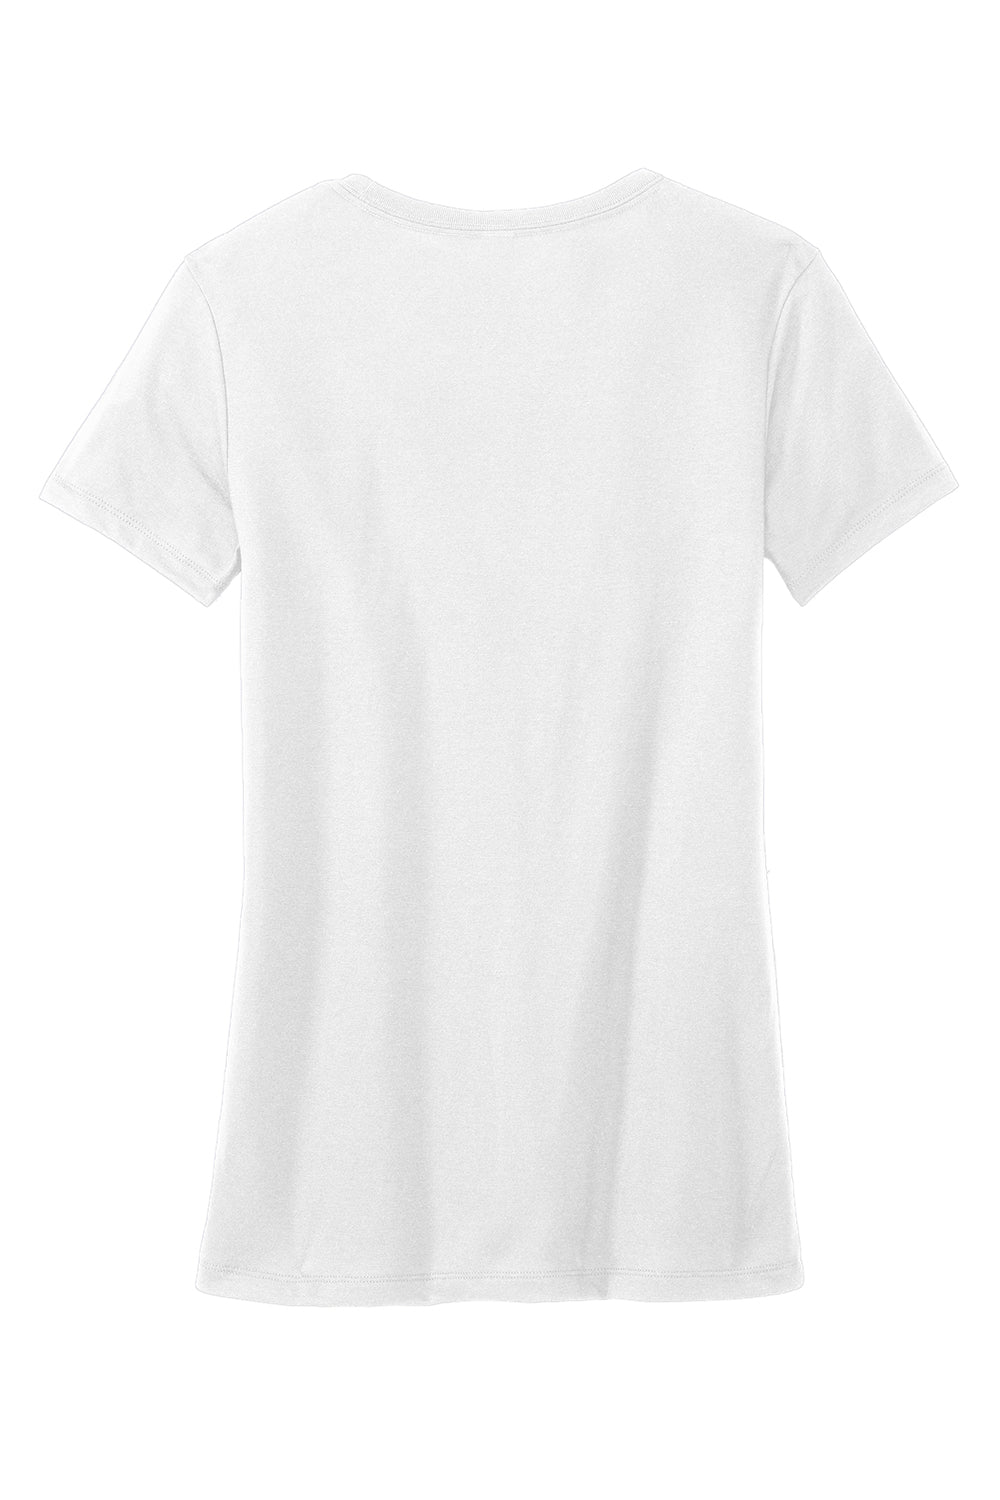 Allmade AL2008 Mens Short Sleeve Crewneck T-Shirt Bright White Flat Back